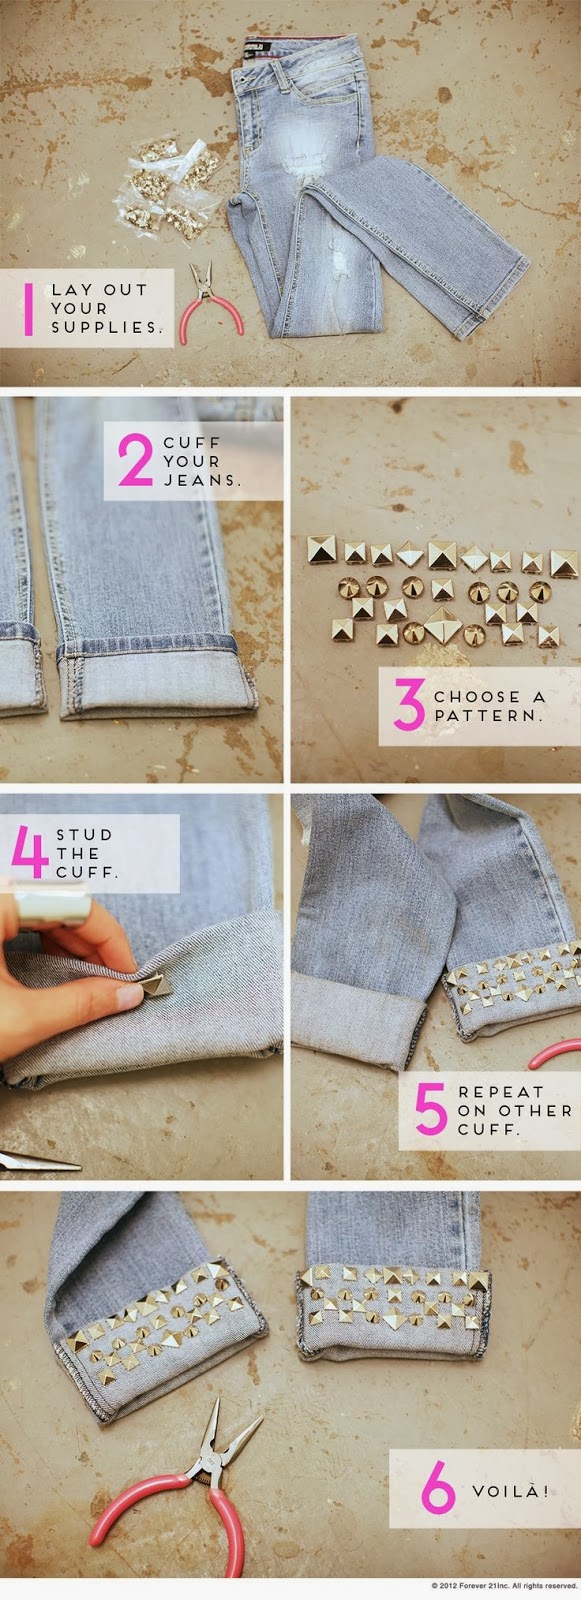 15 Cute DIY Clothes Ideas